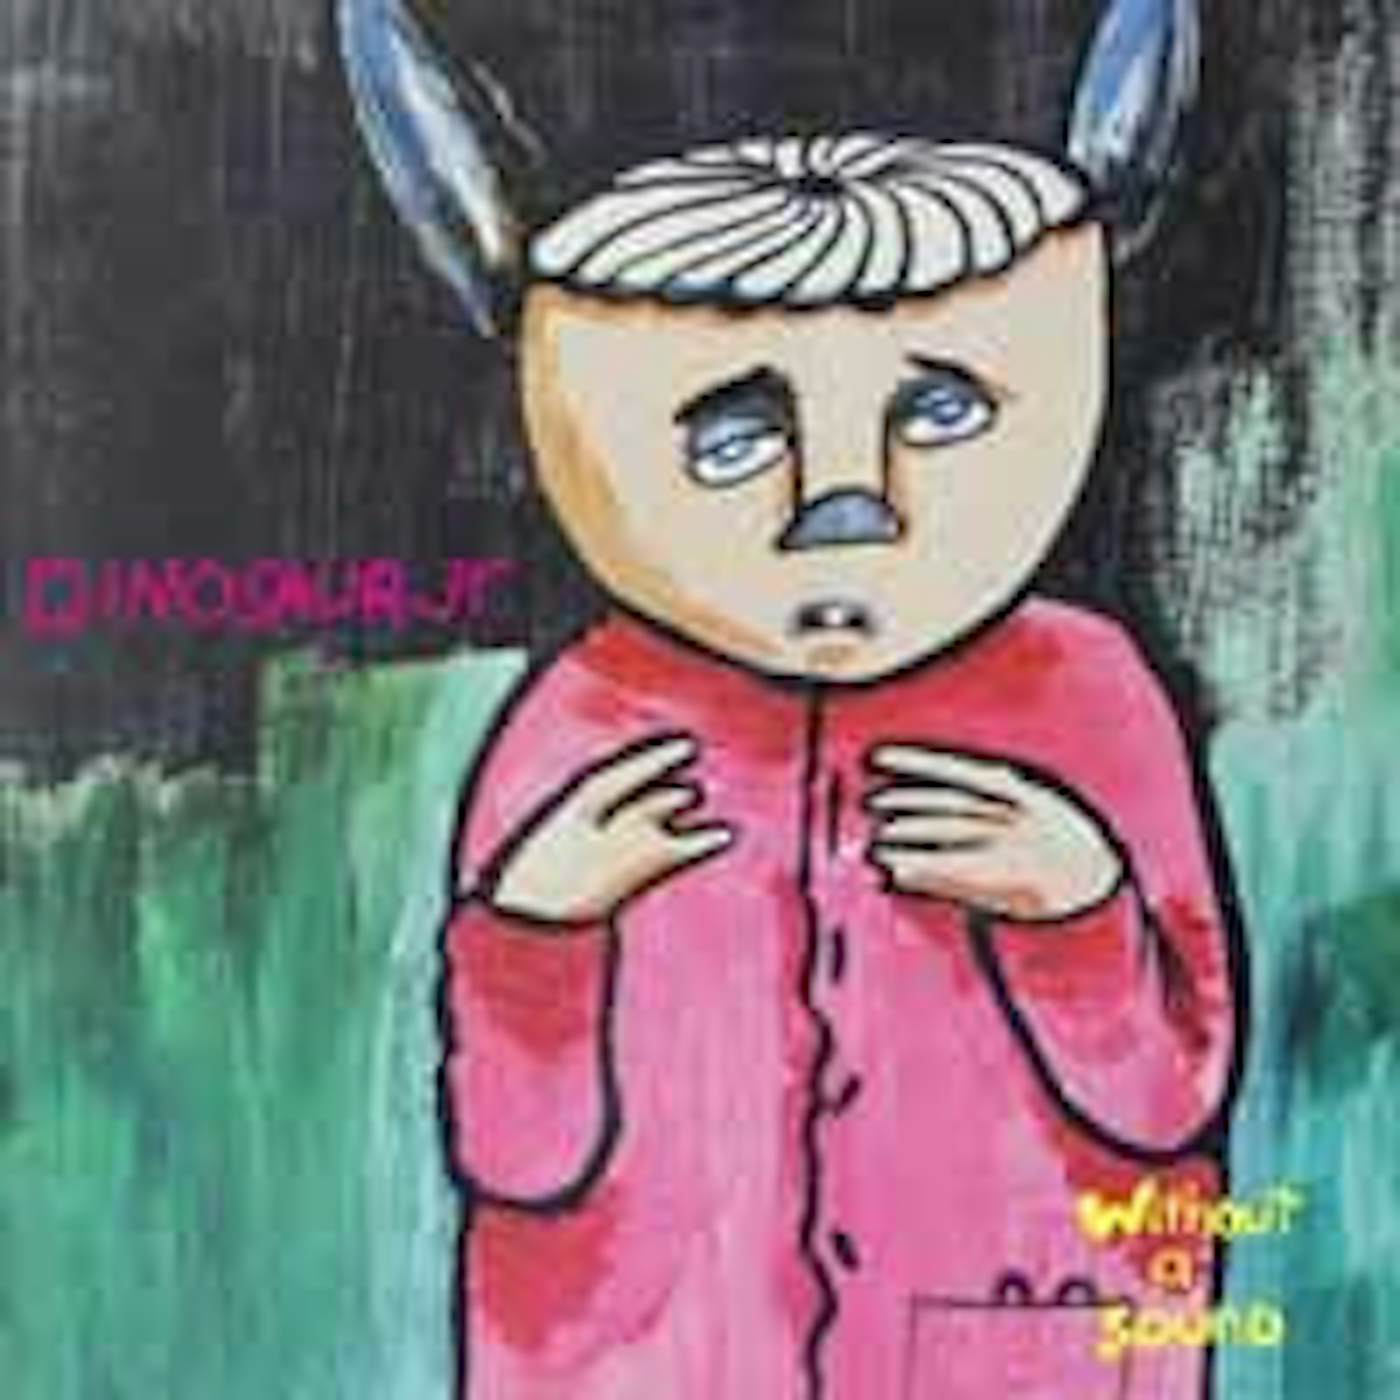 Dinosaur Jr. LP - Without A Sound ~ Deluxe Expanded Edition: Double Gatefold LP - Yellow Vinyl